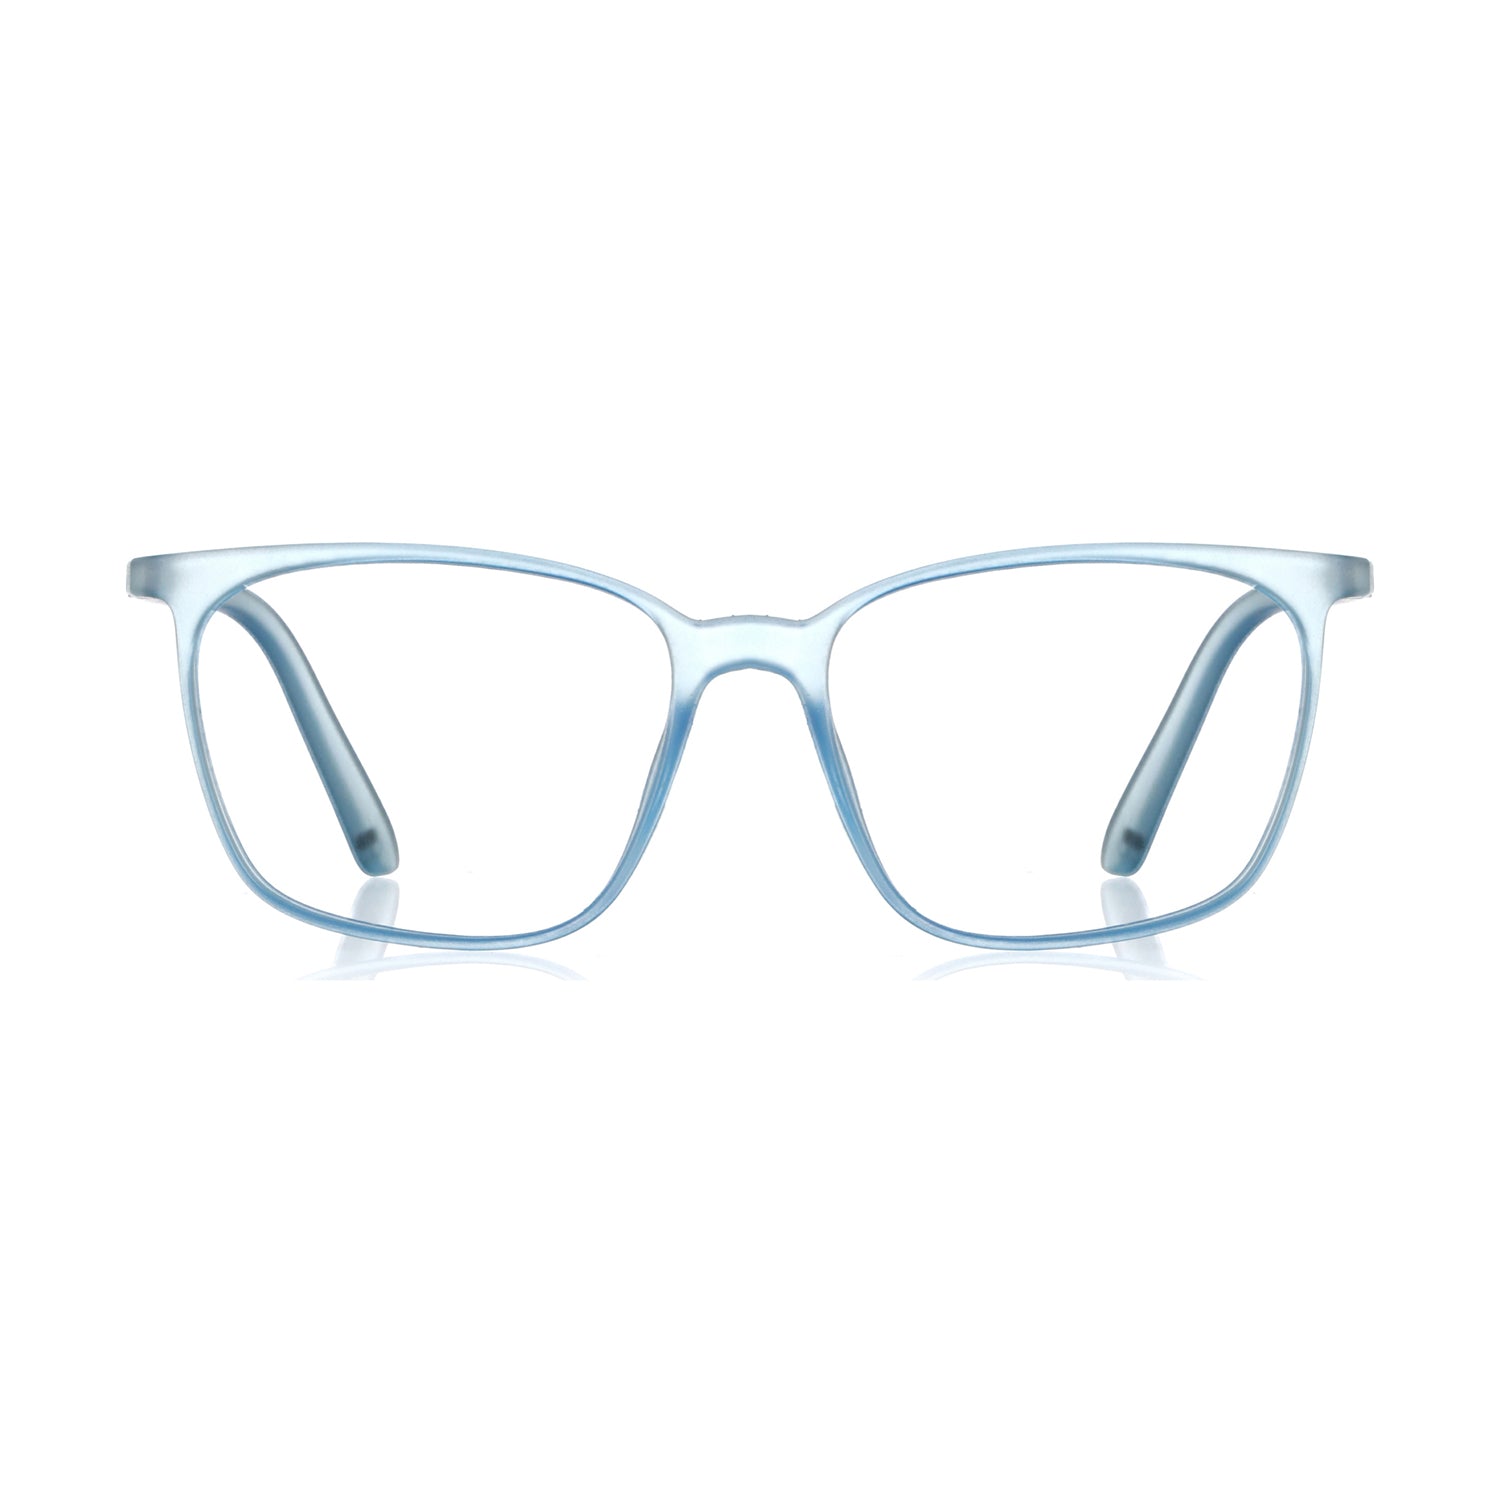 Shop for Square Glasses for Eyes | Square shape glasses online